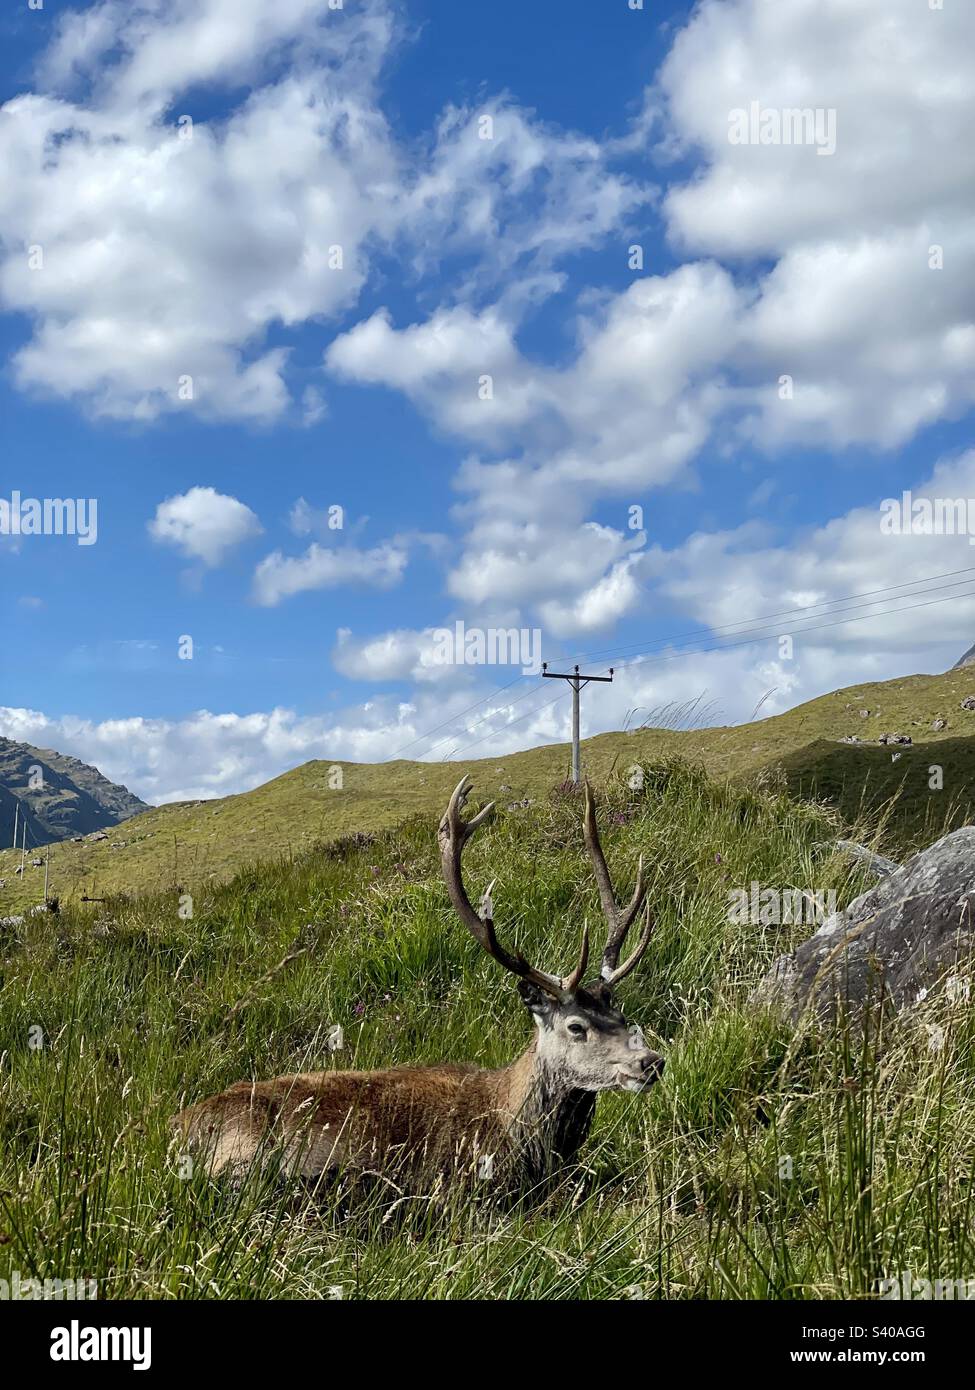 Scottish red stag. Stock Photo